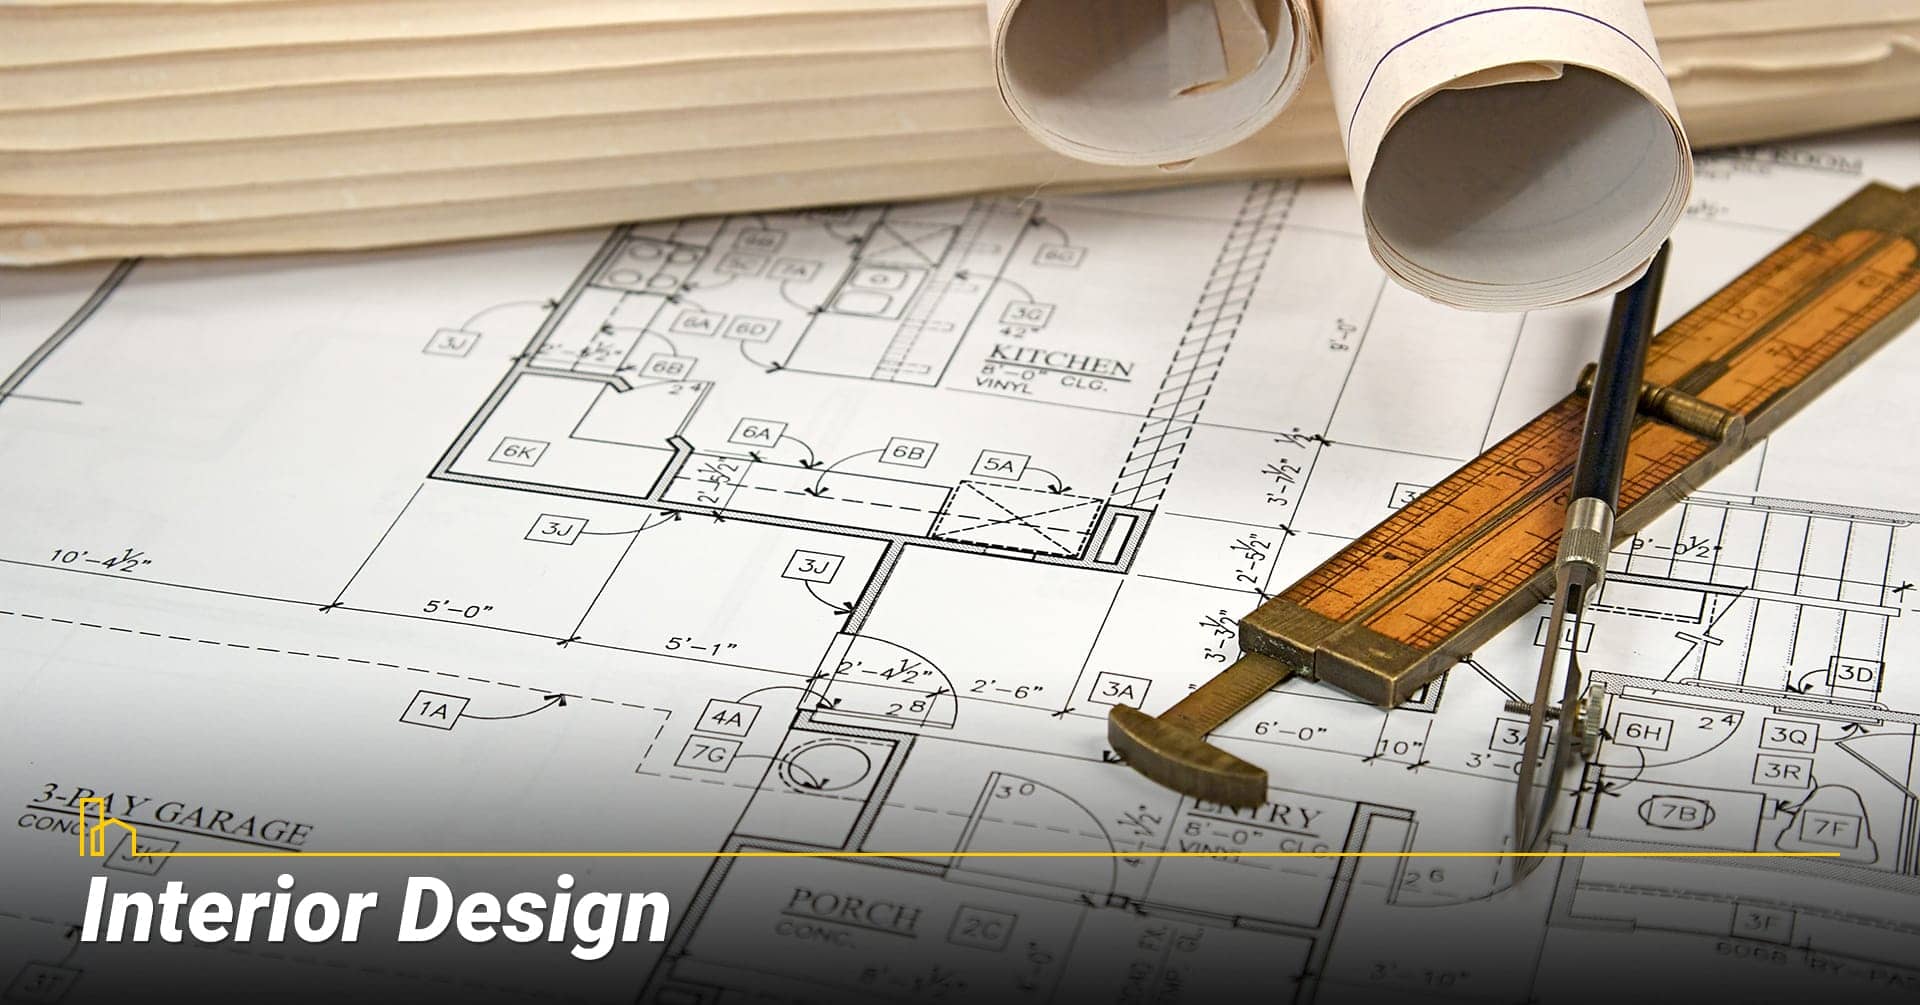 Interior Design, design the interior of your home